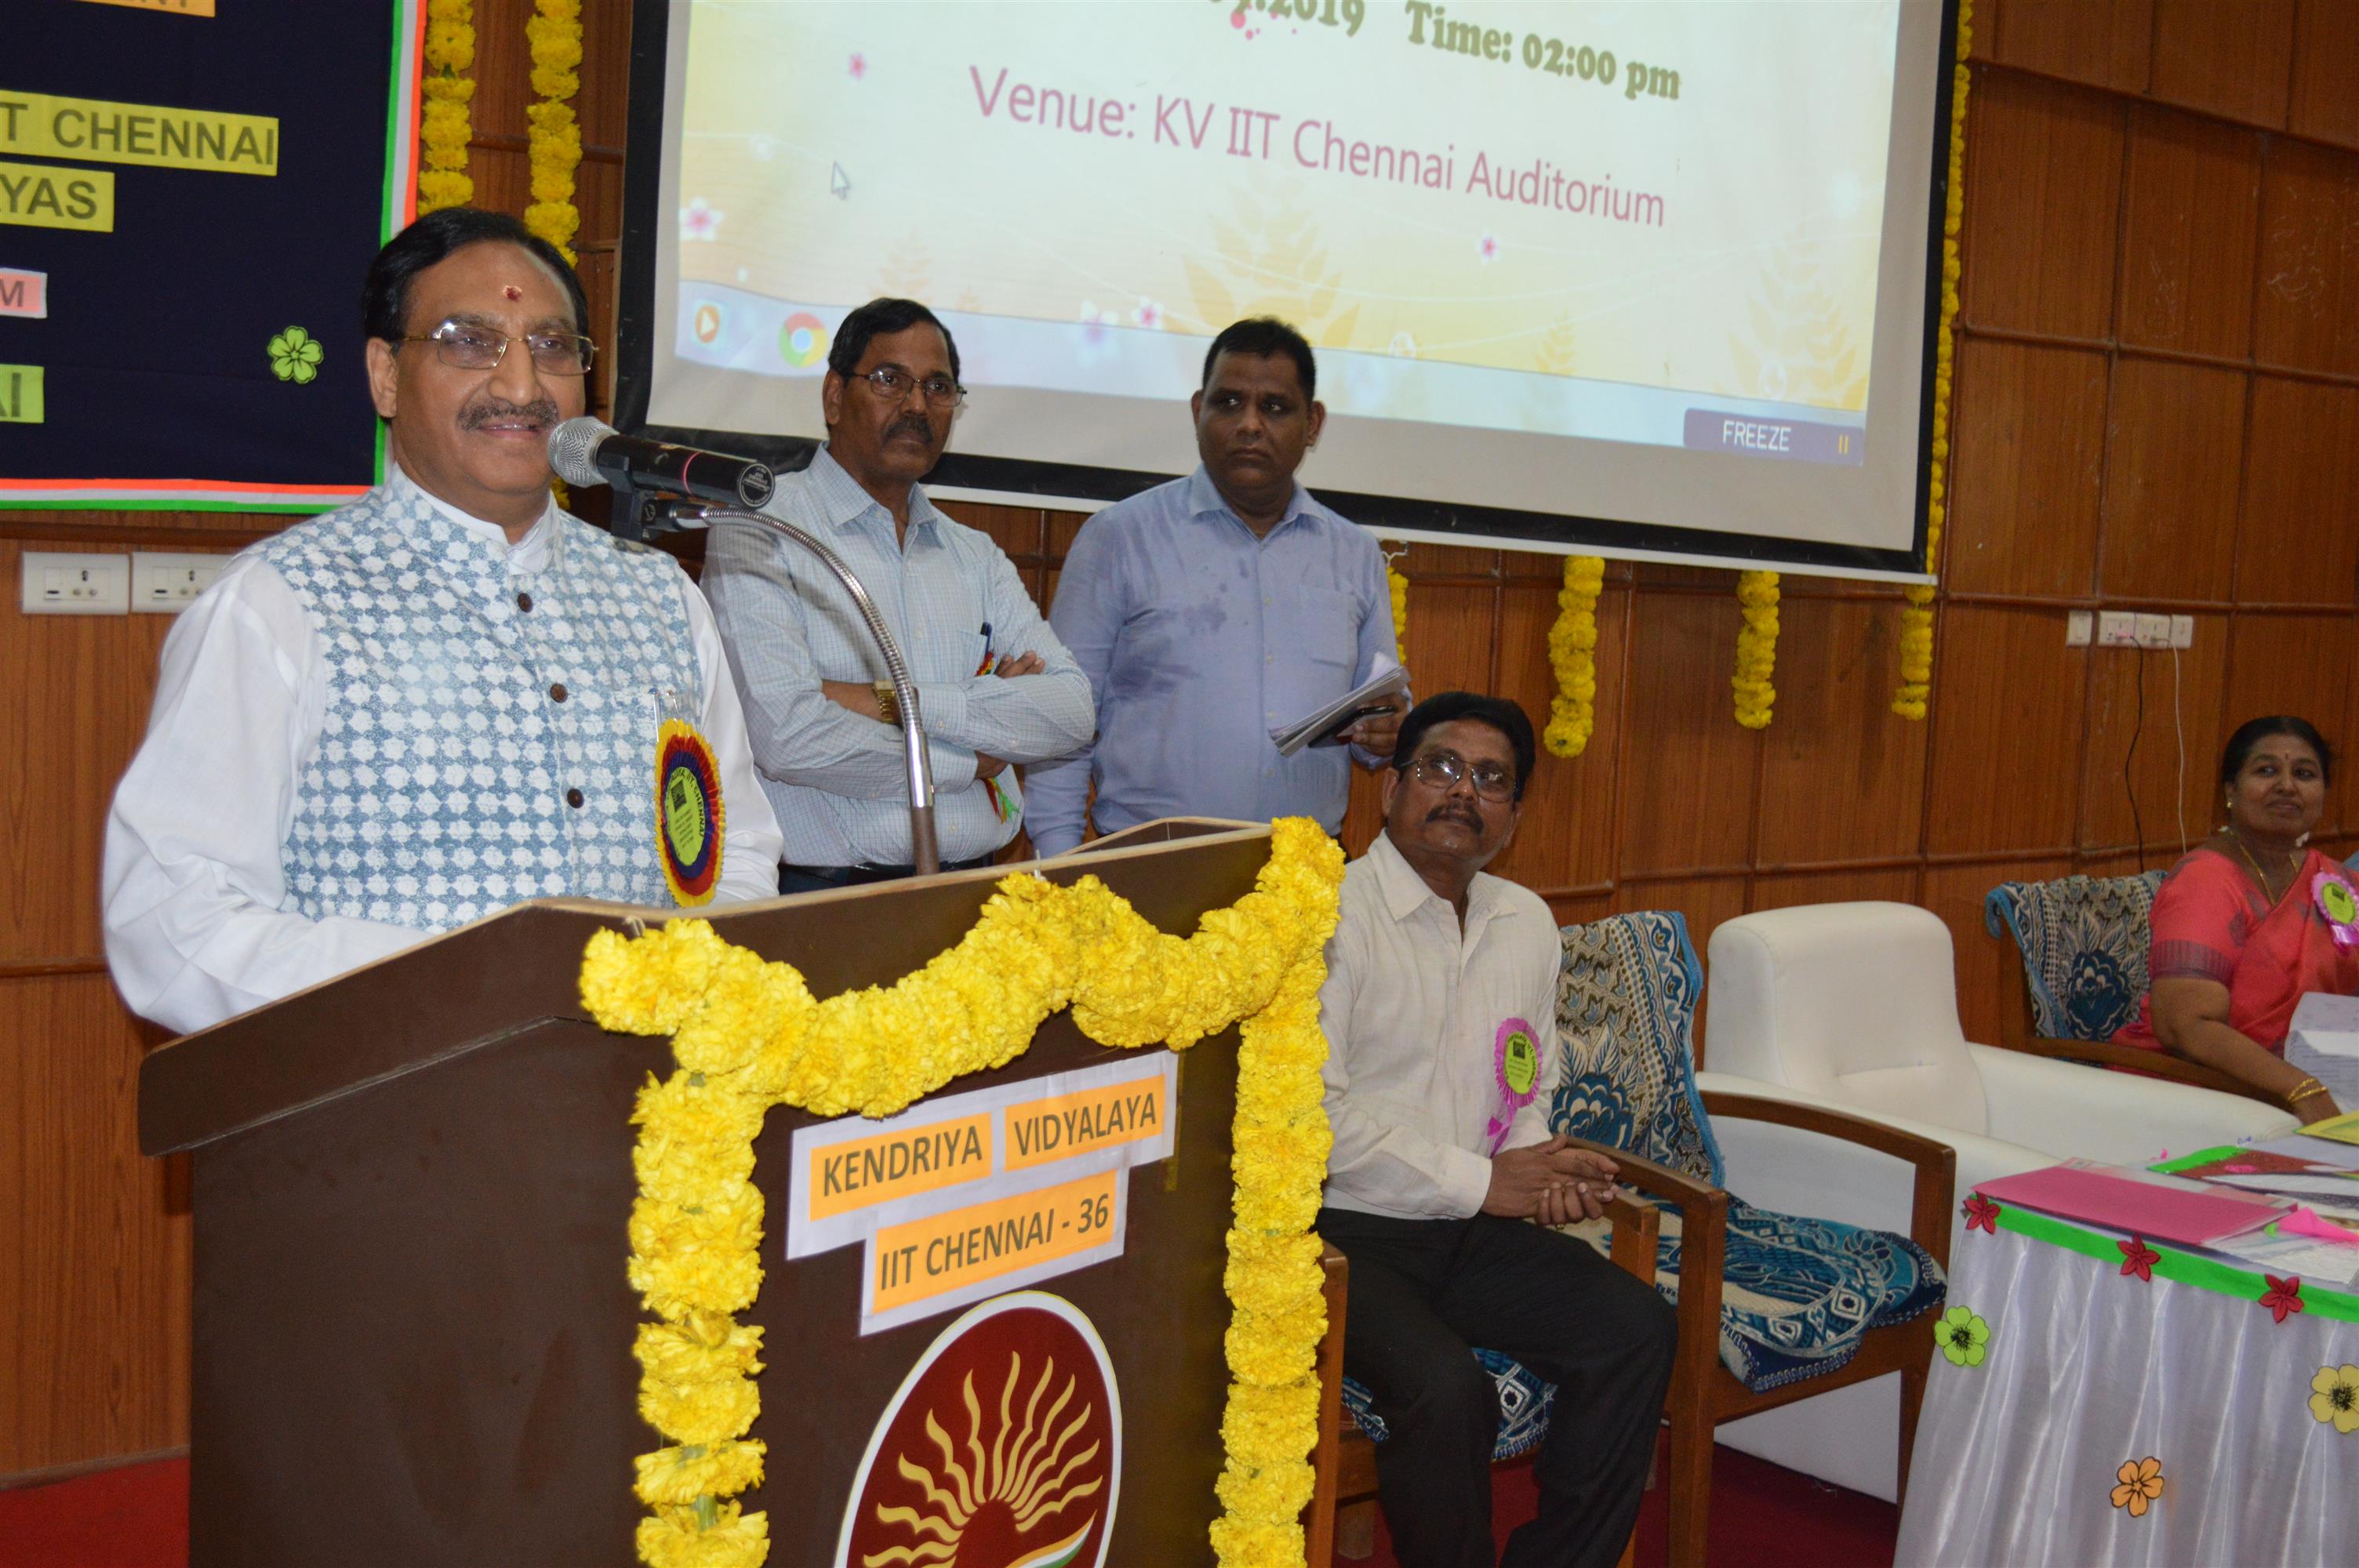 Shri Ramesh Pokhriyal Nishank, Union Minister of Human Resource Development is addressing the students, teachers and officials of the Kendriya Vidyalaya in the KV IIT Campus, Chennai today (30.09.19).